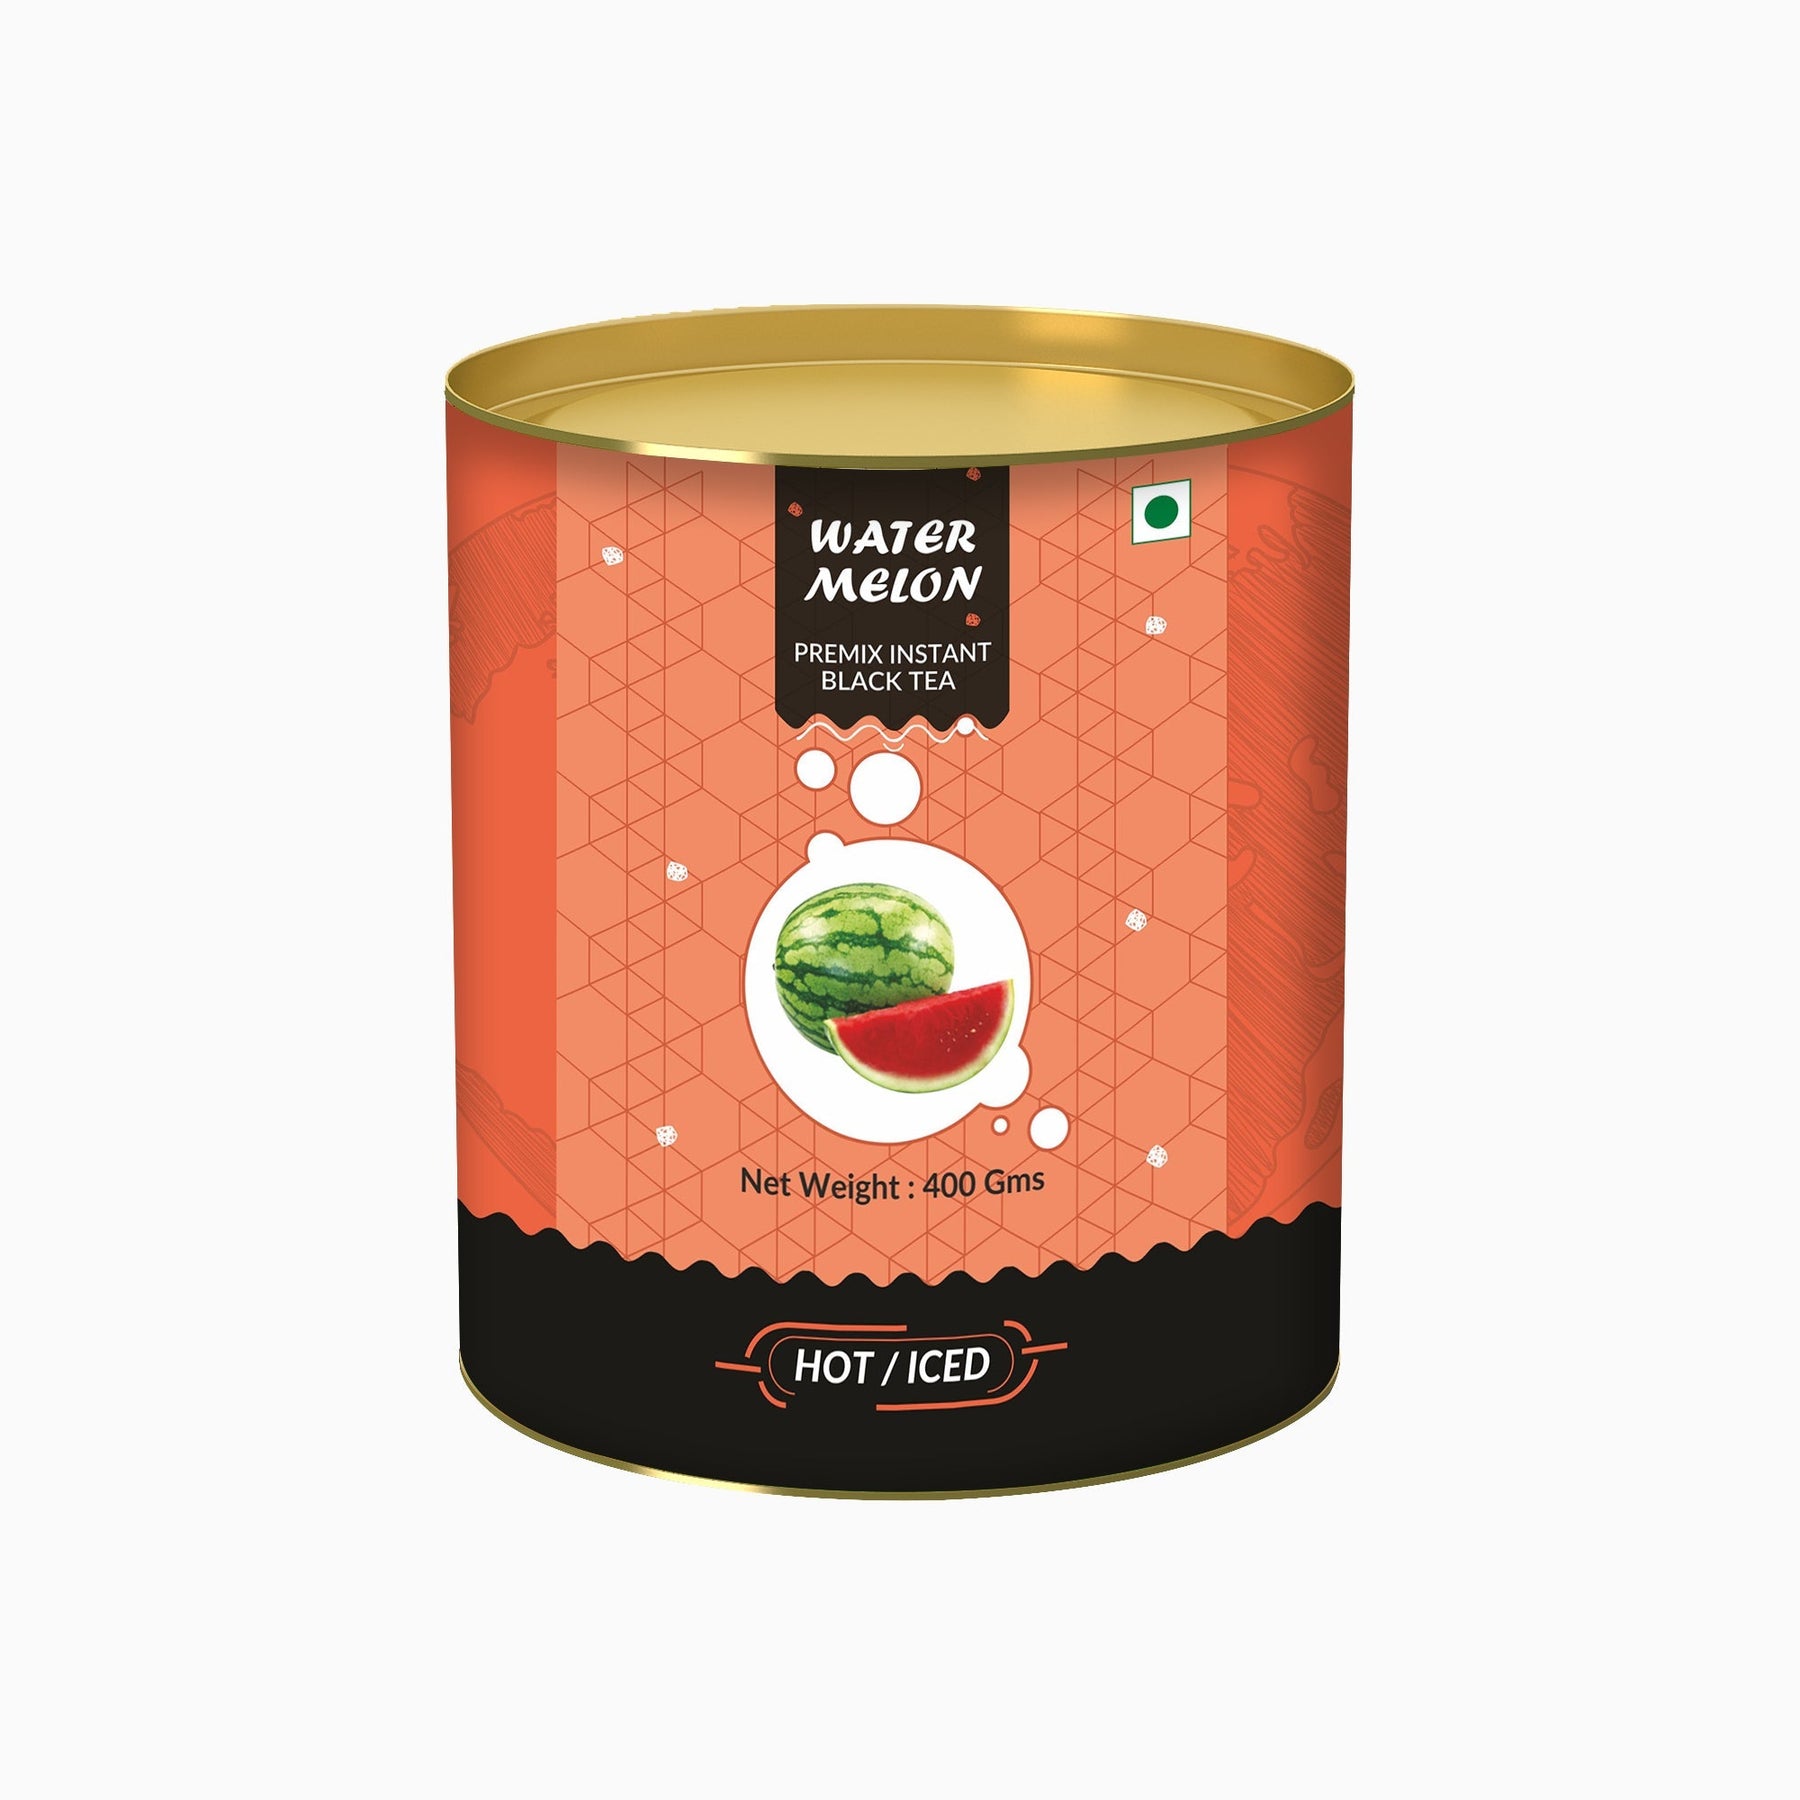 Watermelon Flavored Instant Black Tea - 400 gms